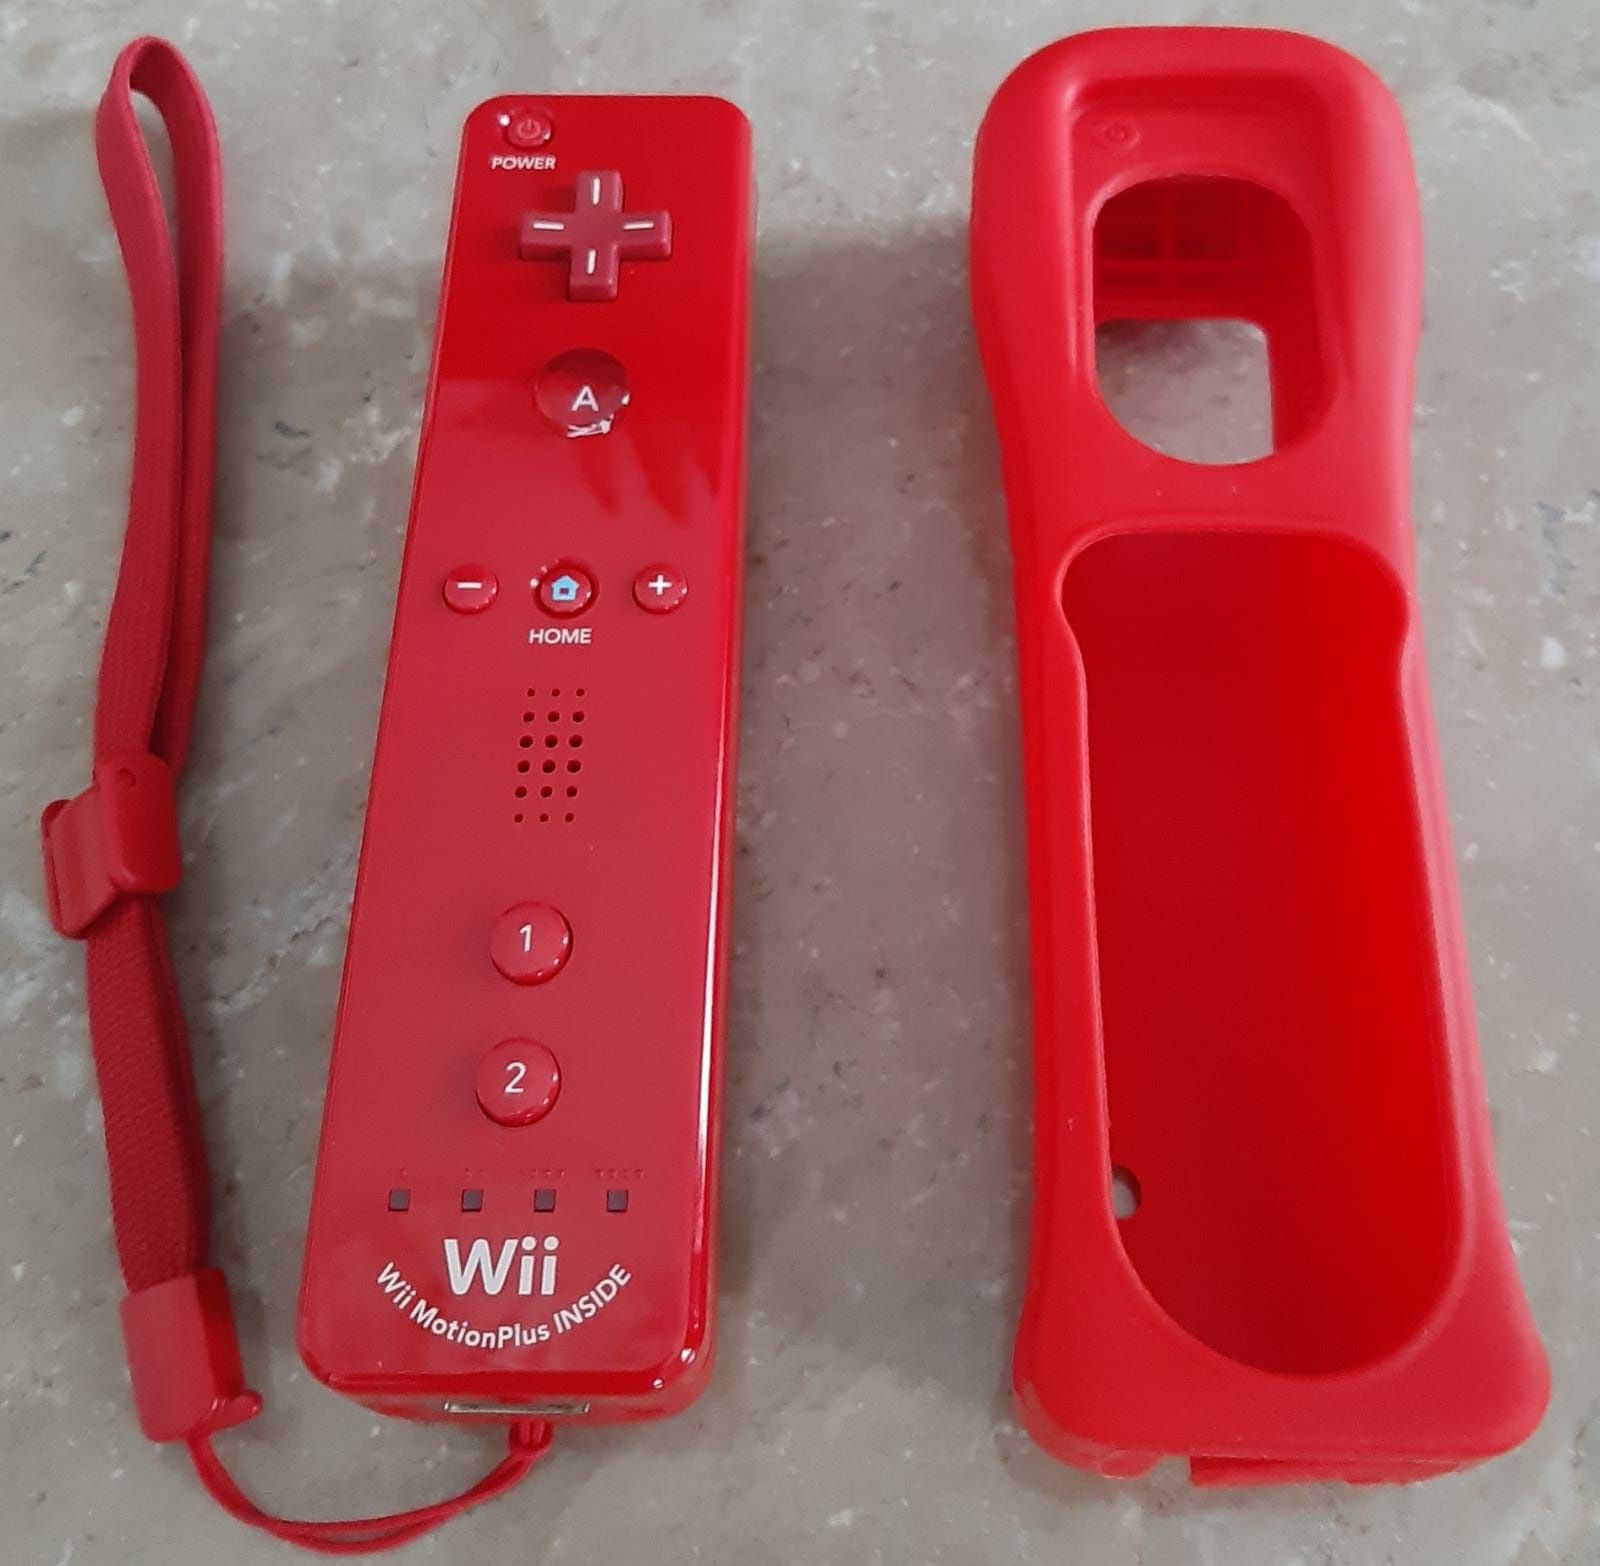 Consola Nintendo Wii Mini + Comando Wii motion plus inside + Nunchuck